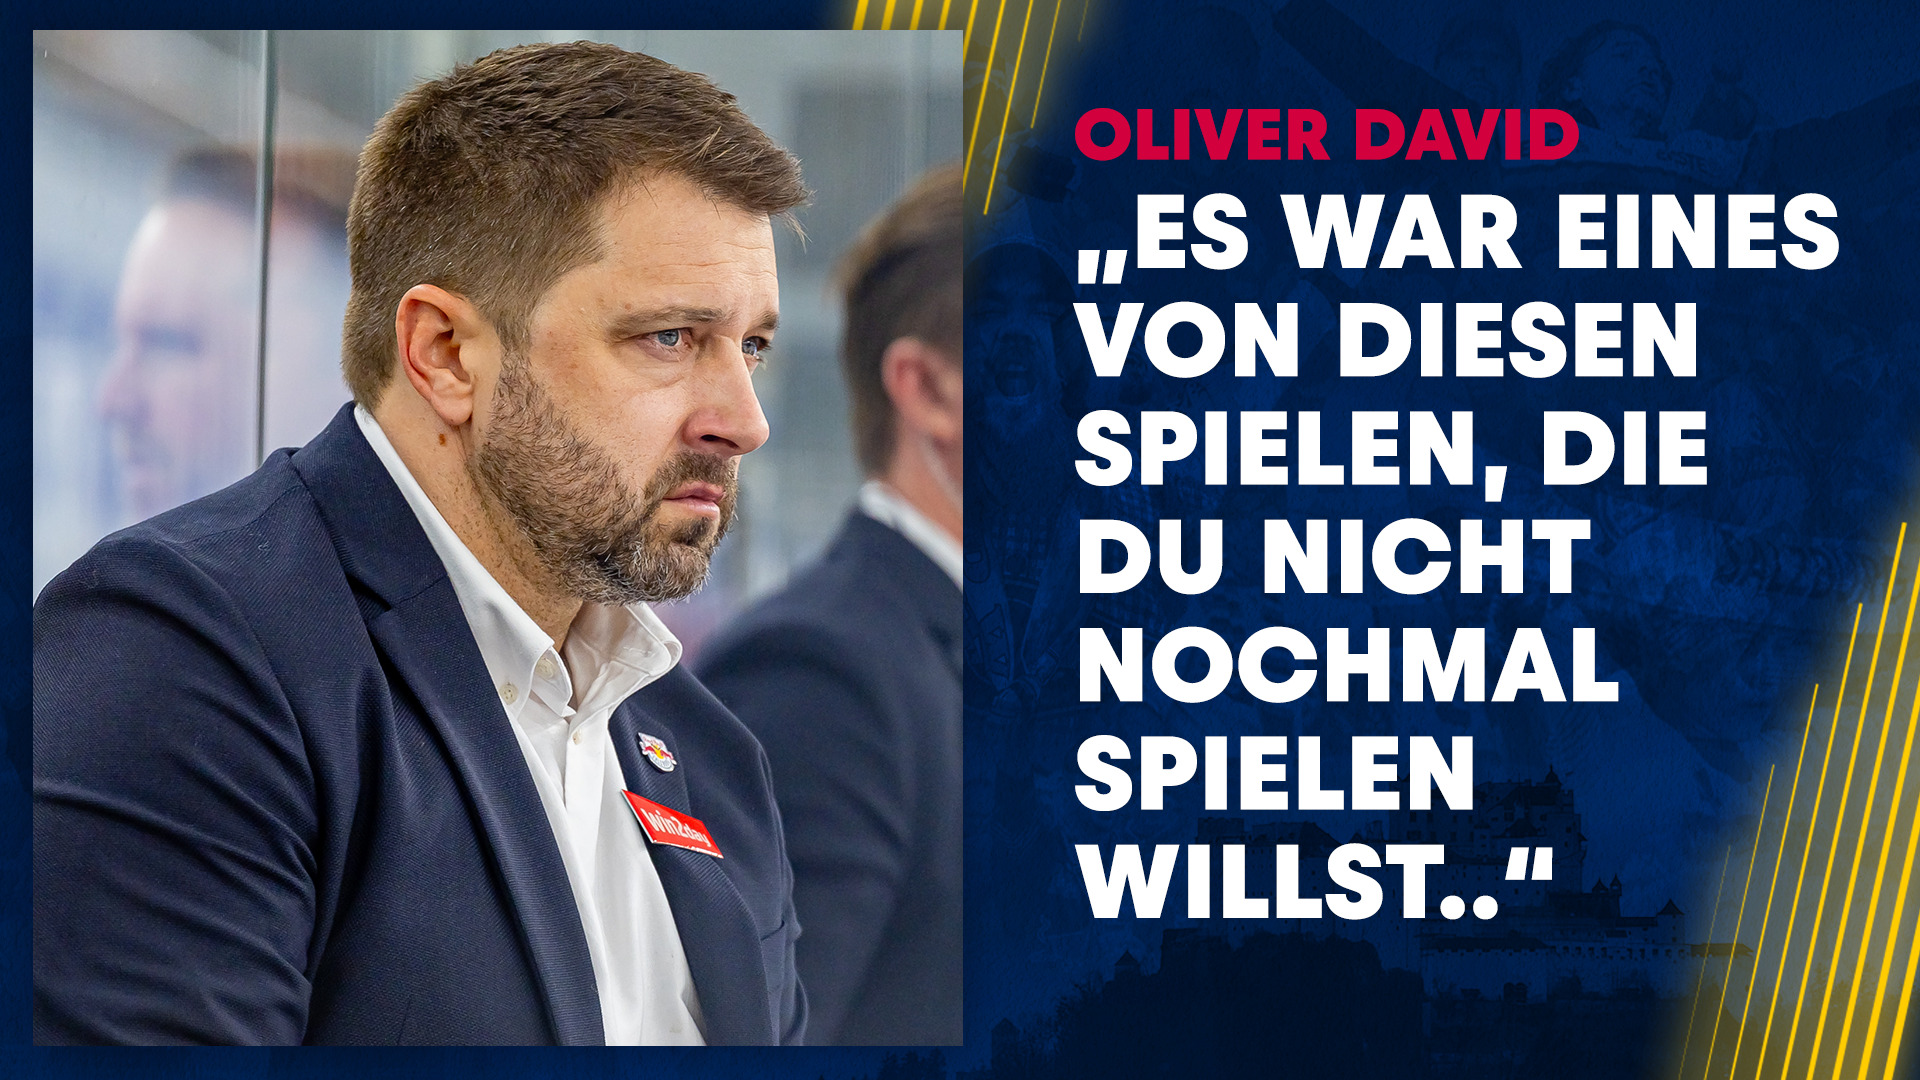 Statements: Oliver David